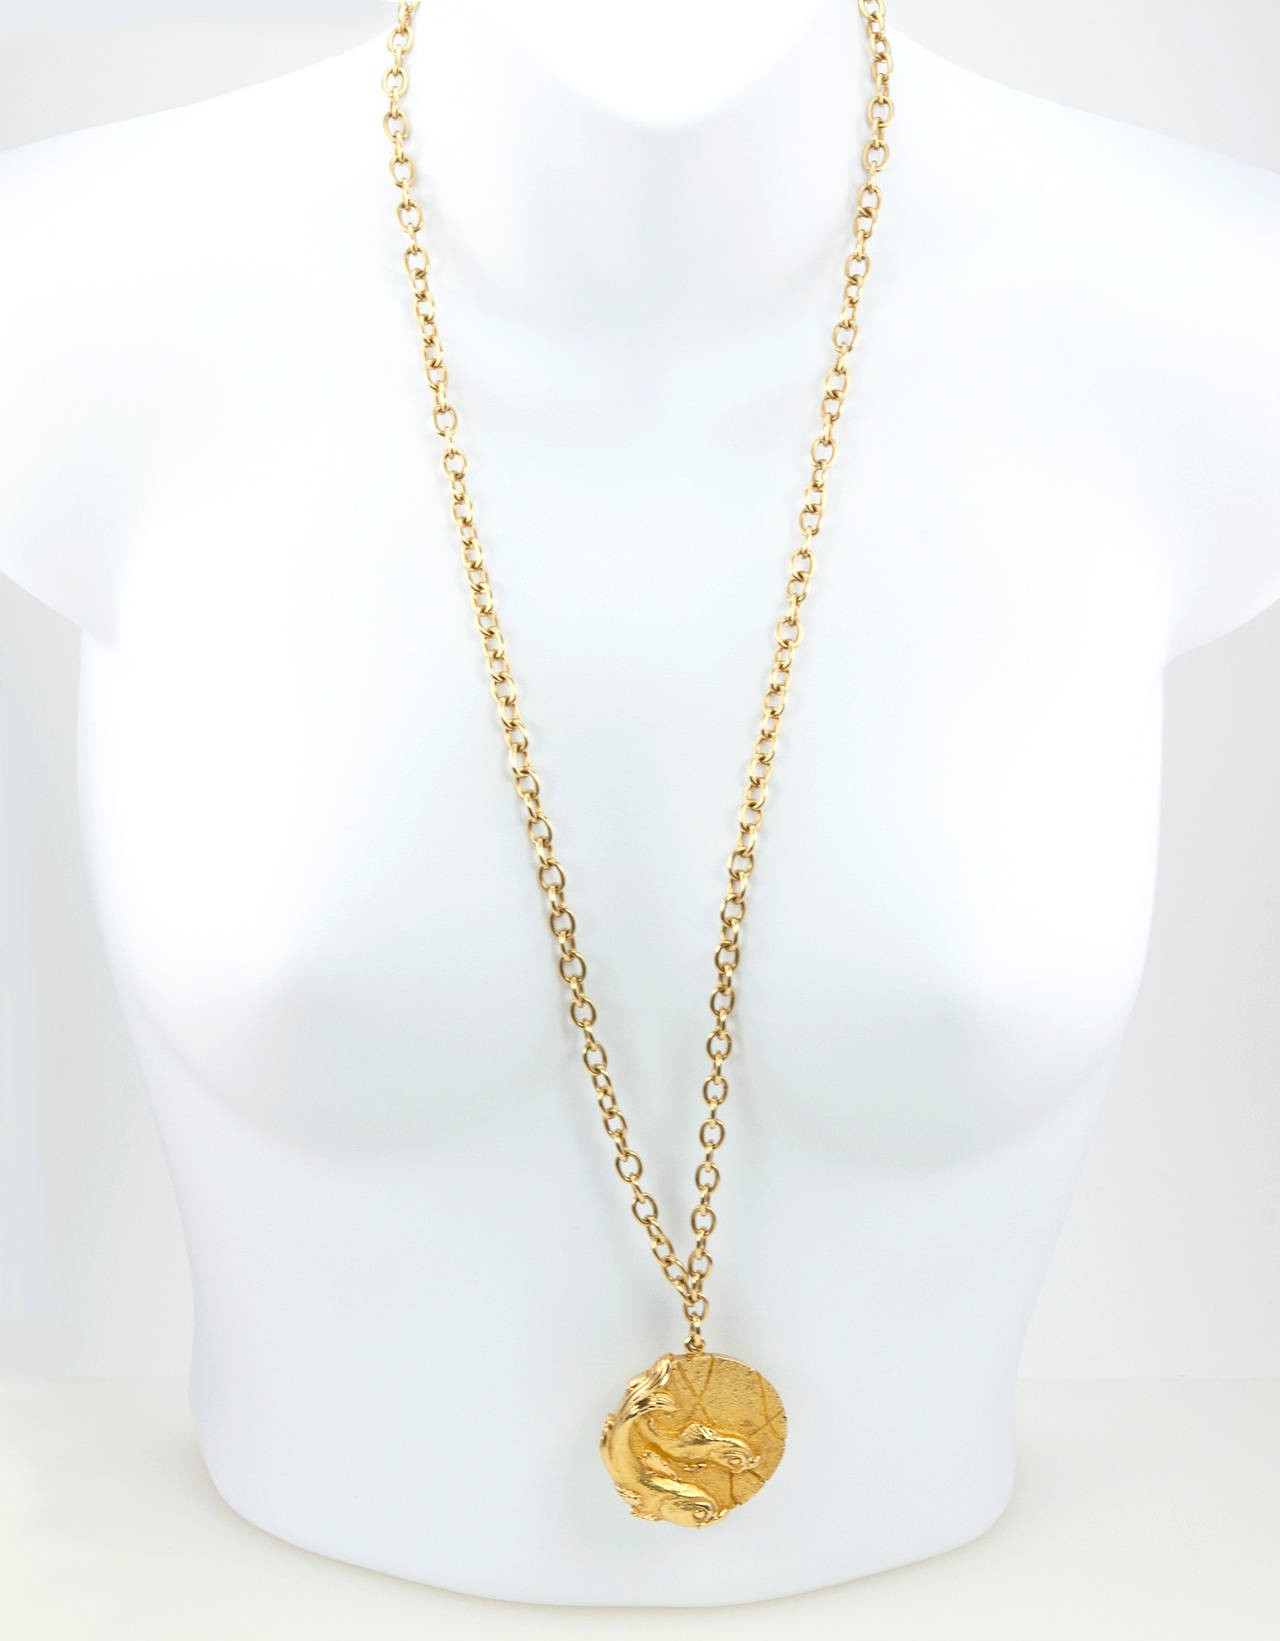 Tiffany & Co. Pisces Gold Vintage Zodiac Necklace - About